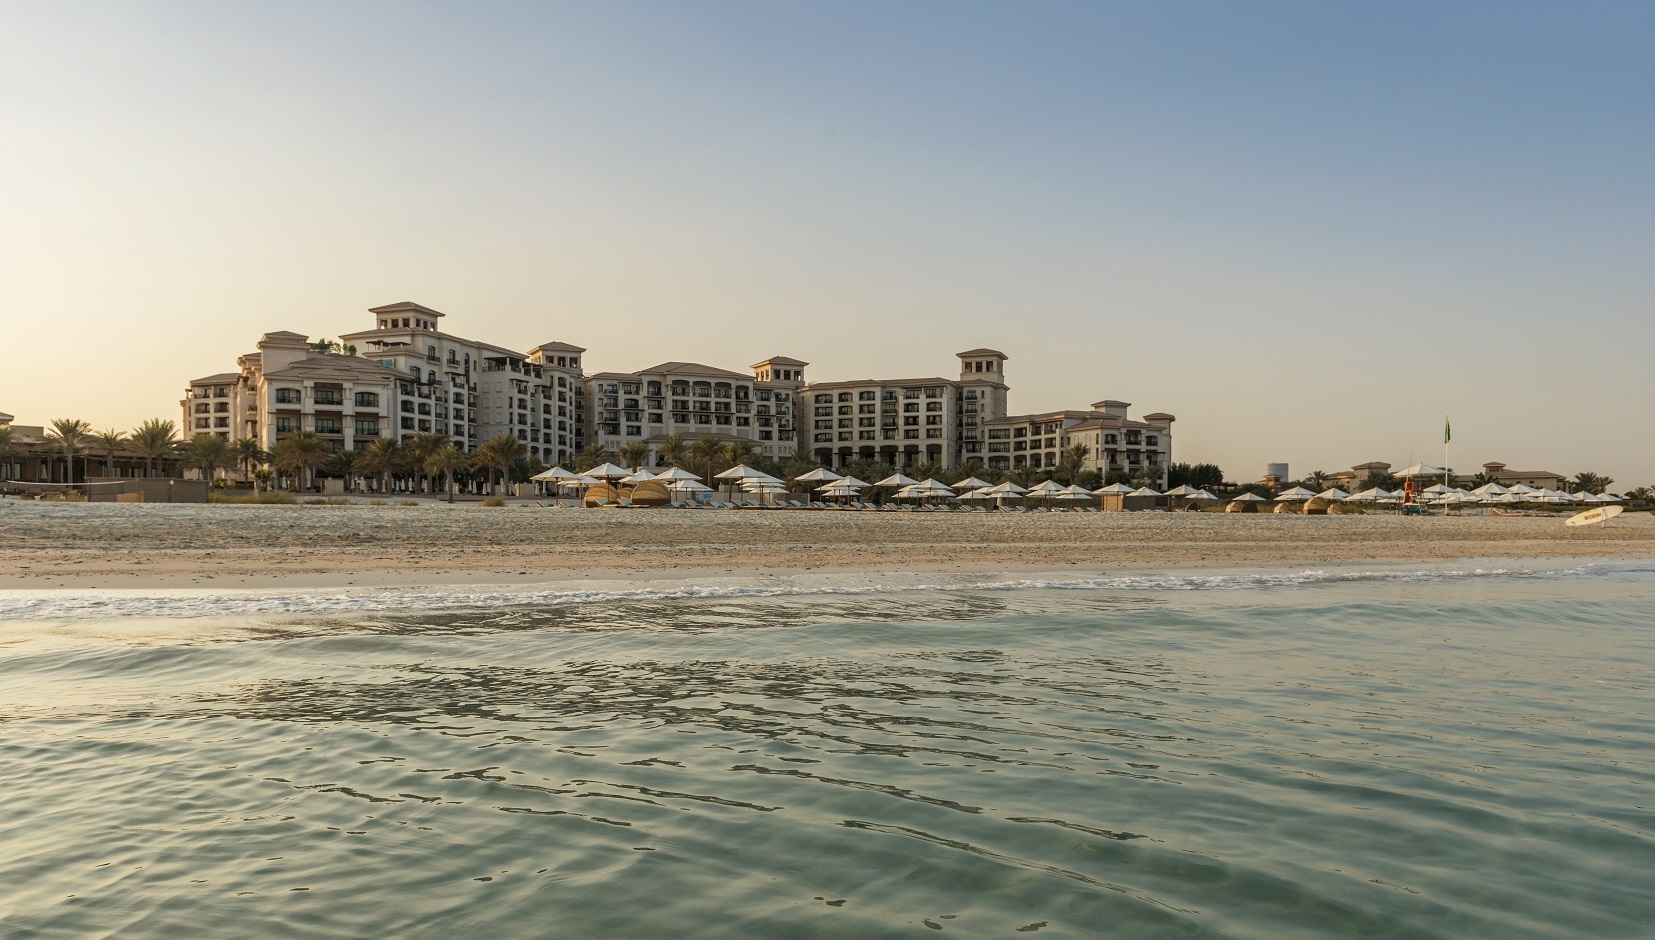 St regis saadiyat island abu dhabi. St Regis Saadiyat Island пляж. Grove (Абу-Даби, остров Саадият). The St. Regis Saadiyat Island Resort, Abu Dhabi. The St. Regis Marsa Arabia Island.